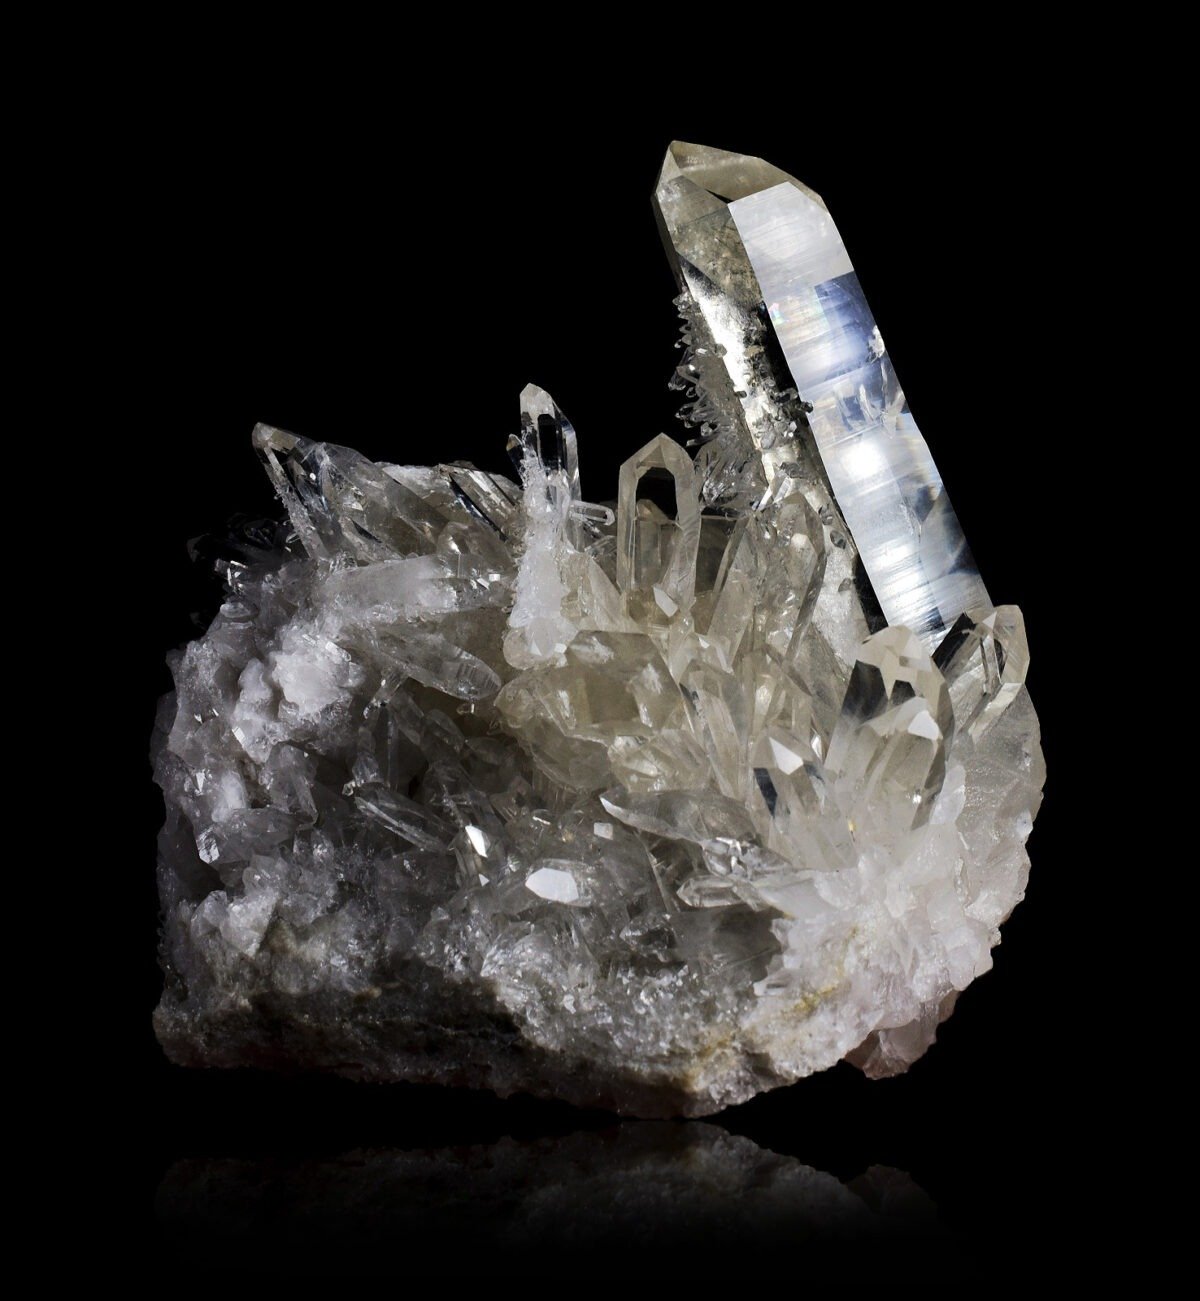 Quartz crystals from La Gardette, France